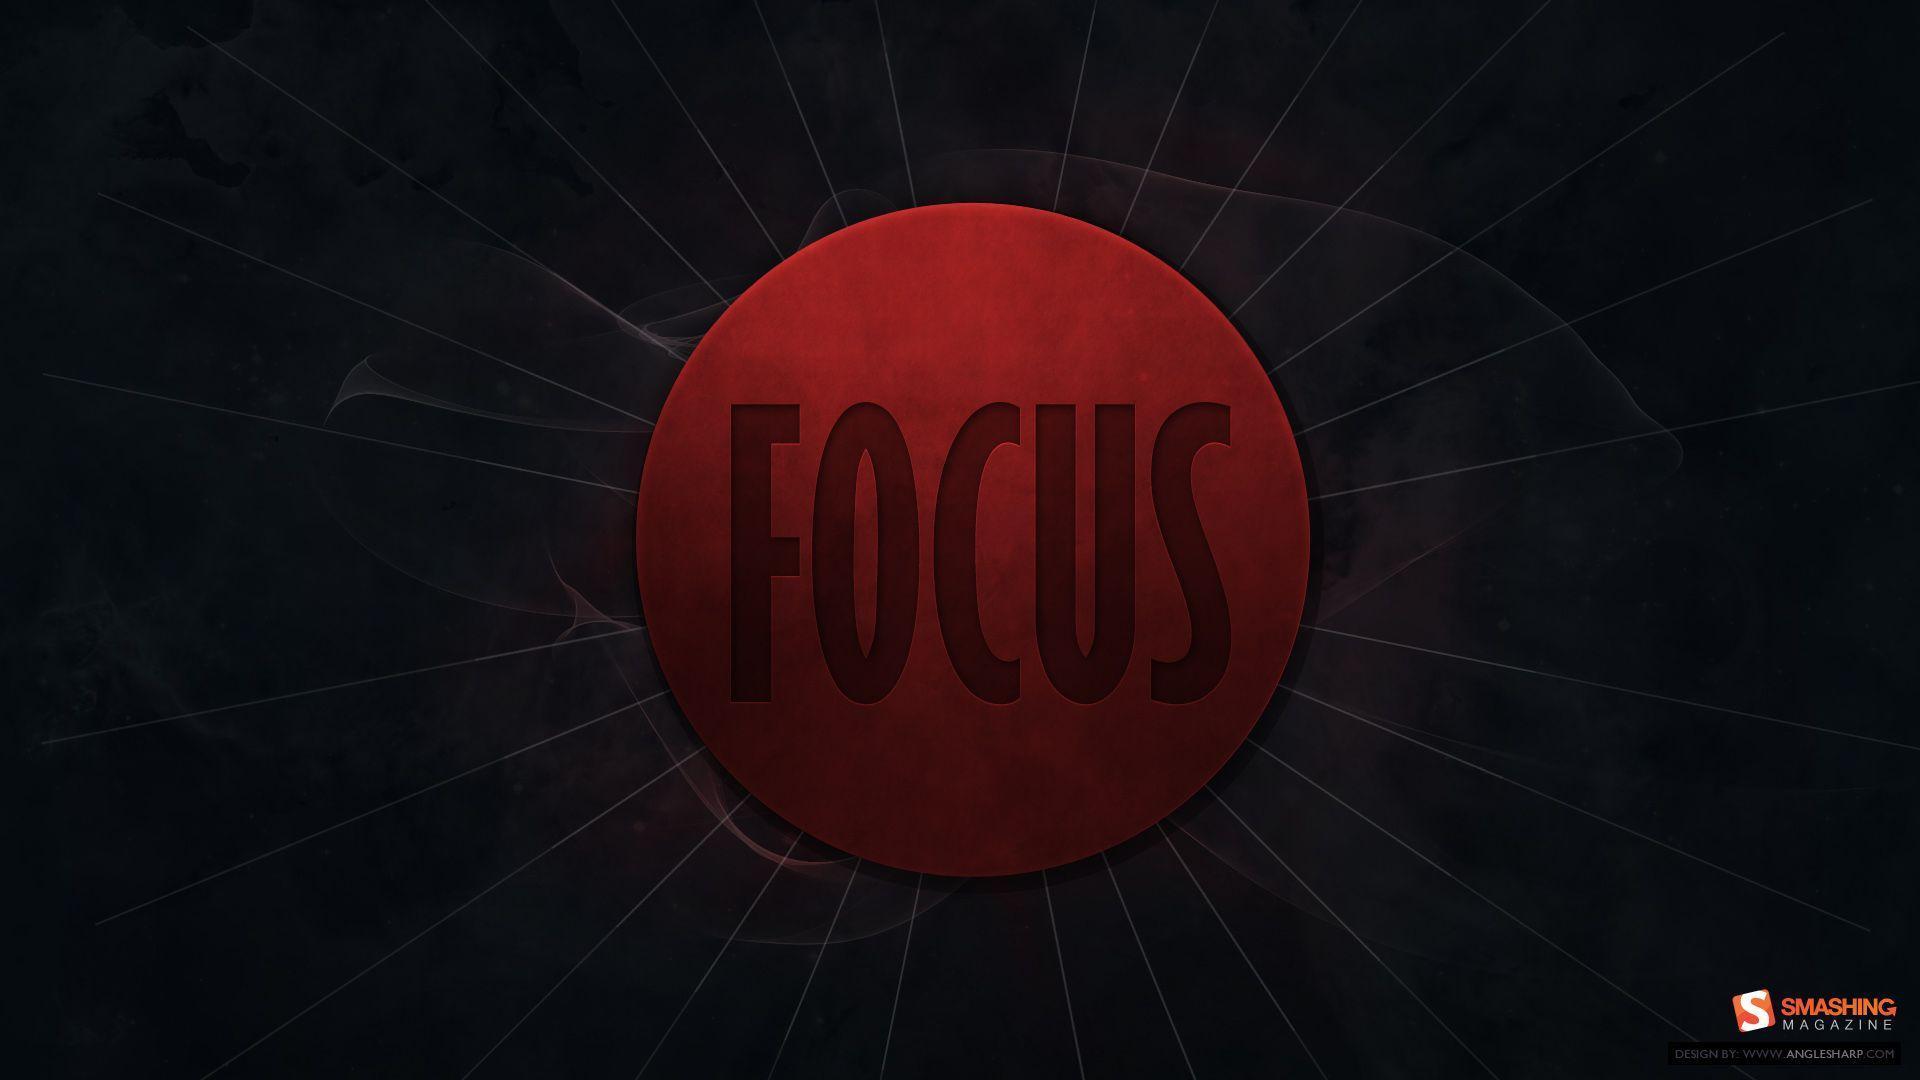 Focus Word Wallpaper 4k